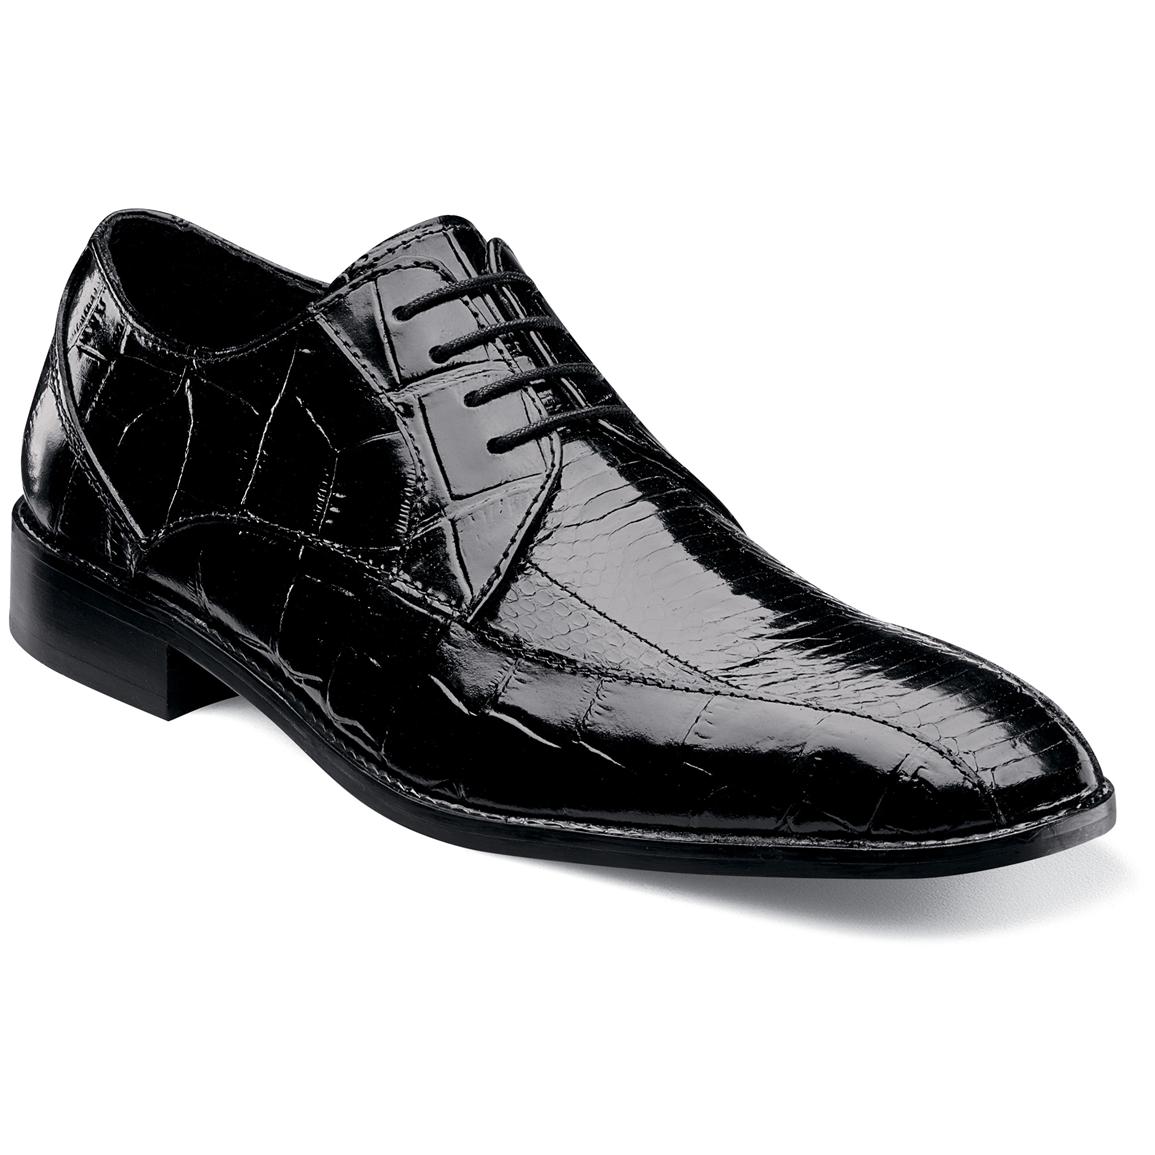 stacy adams mens dress shoes black